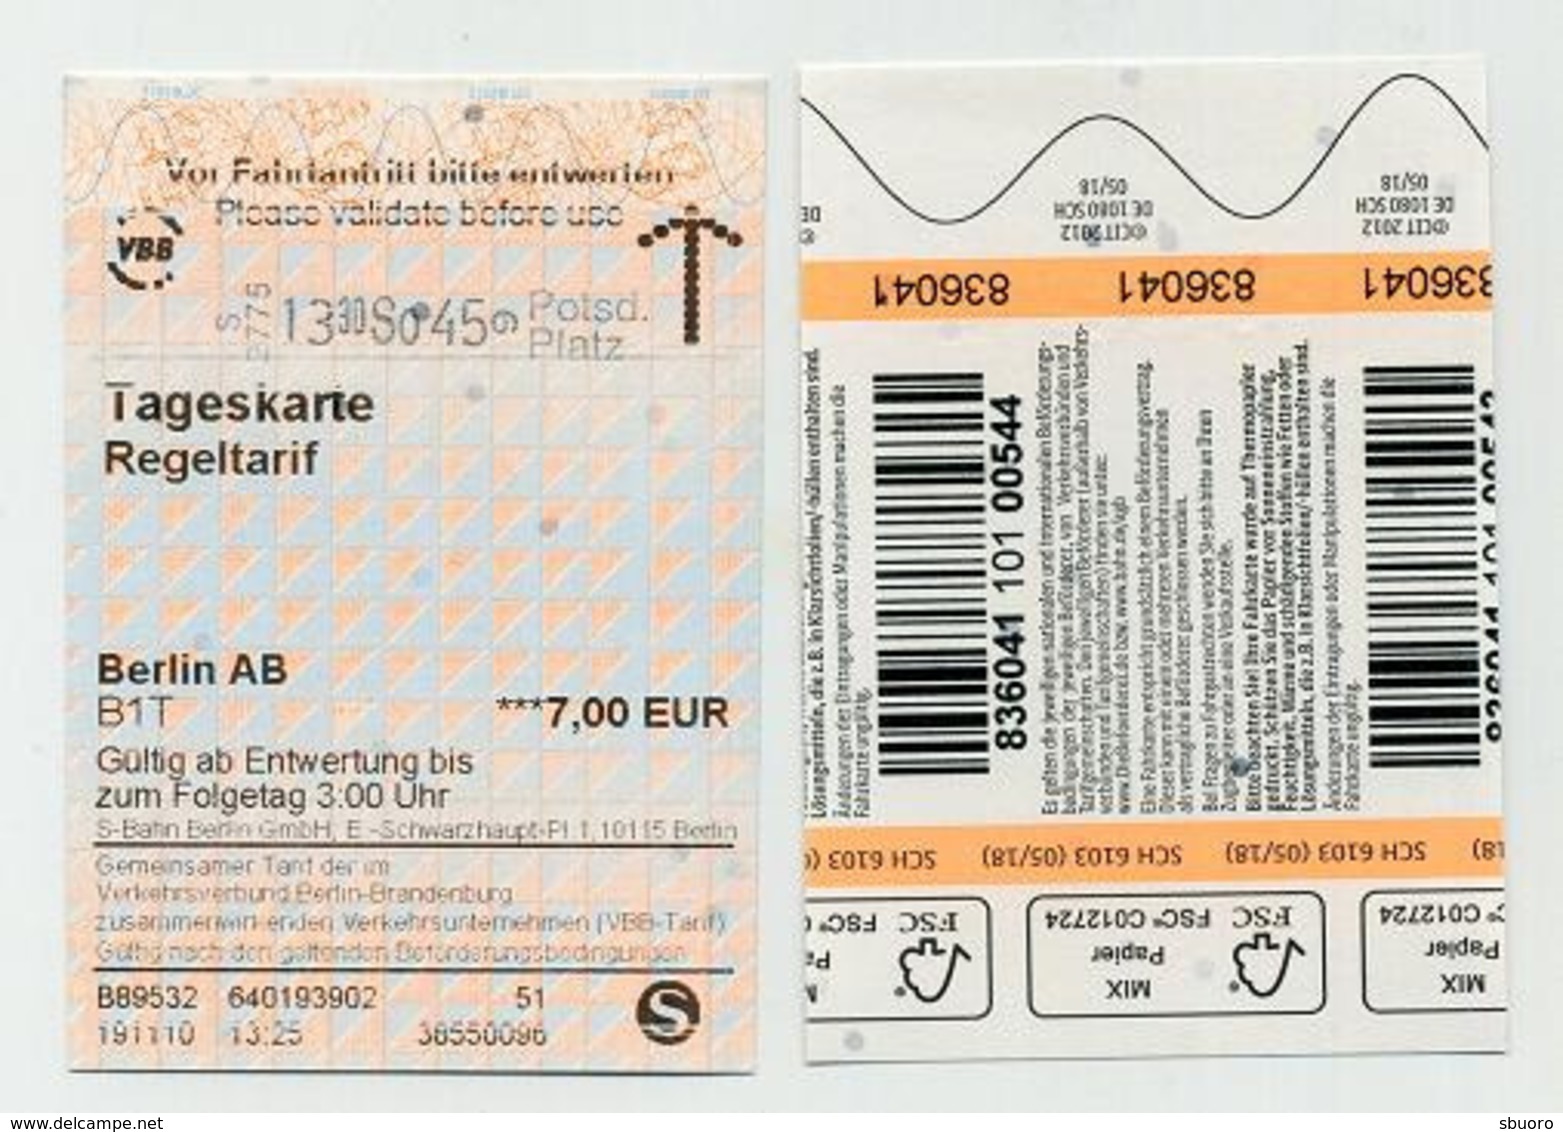 Transport Ticket. Tageskarte Regeltarif Berlin Zones A Et B 2019 Allemagne Germany Deutschland Tyskland - Europe